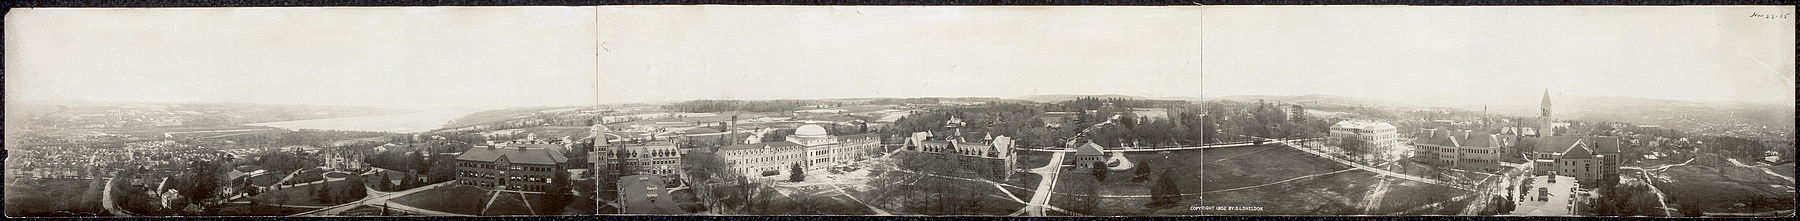 Panorama of Cornell University campus